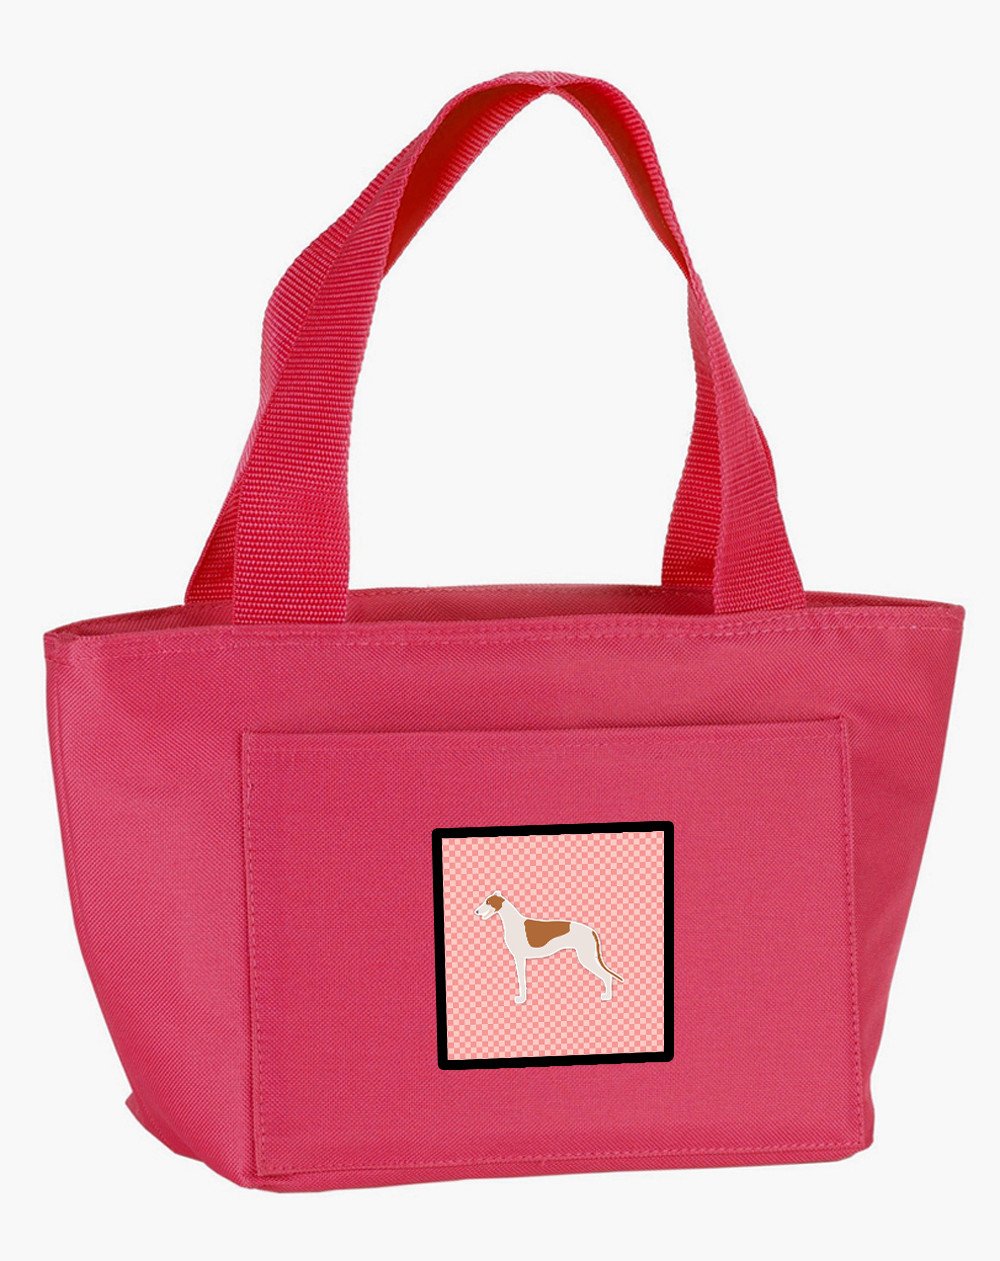 Greyhound Checkerboard Pink Lunch Bag BB3605PK-8808 by Caroline's Treasures